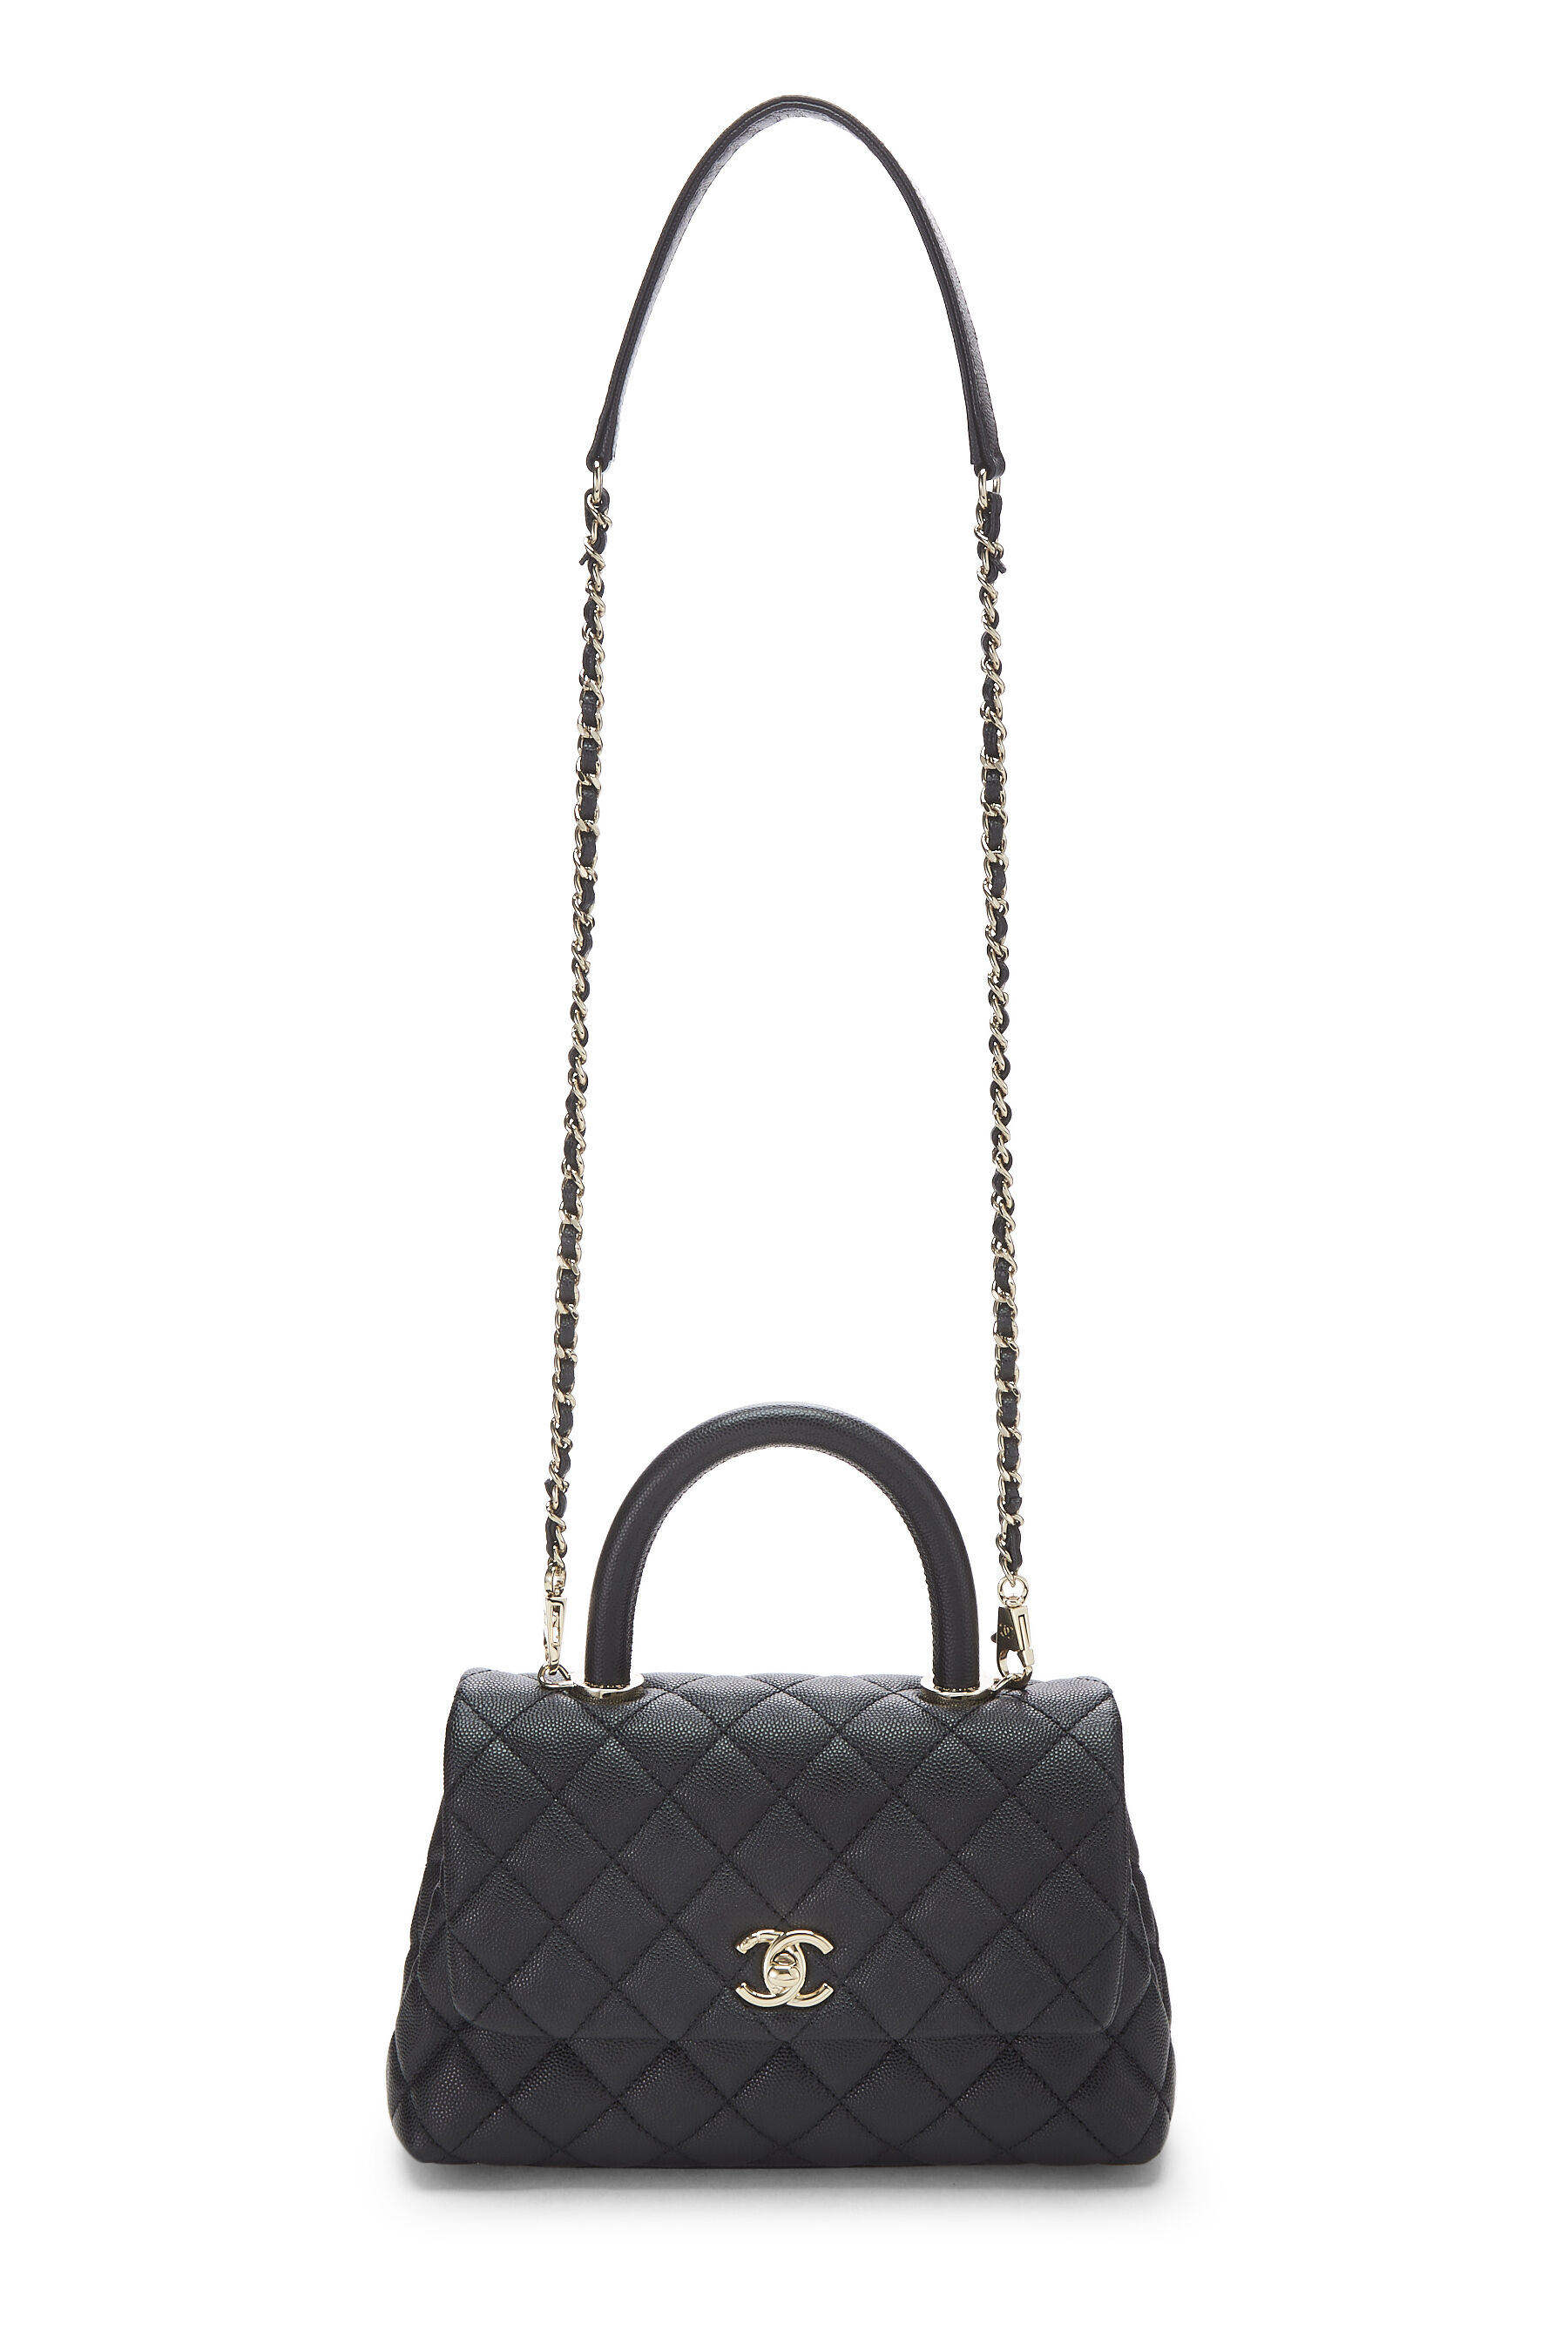 Chanel Medium Coco Handle Flap Bag Black Quilted Caviar/Black